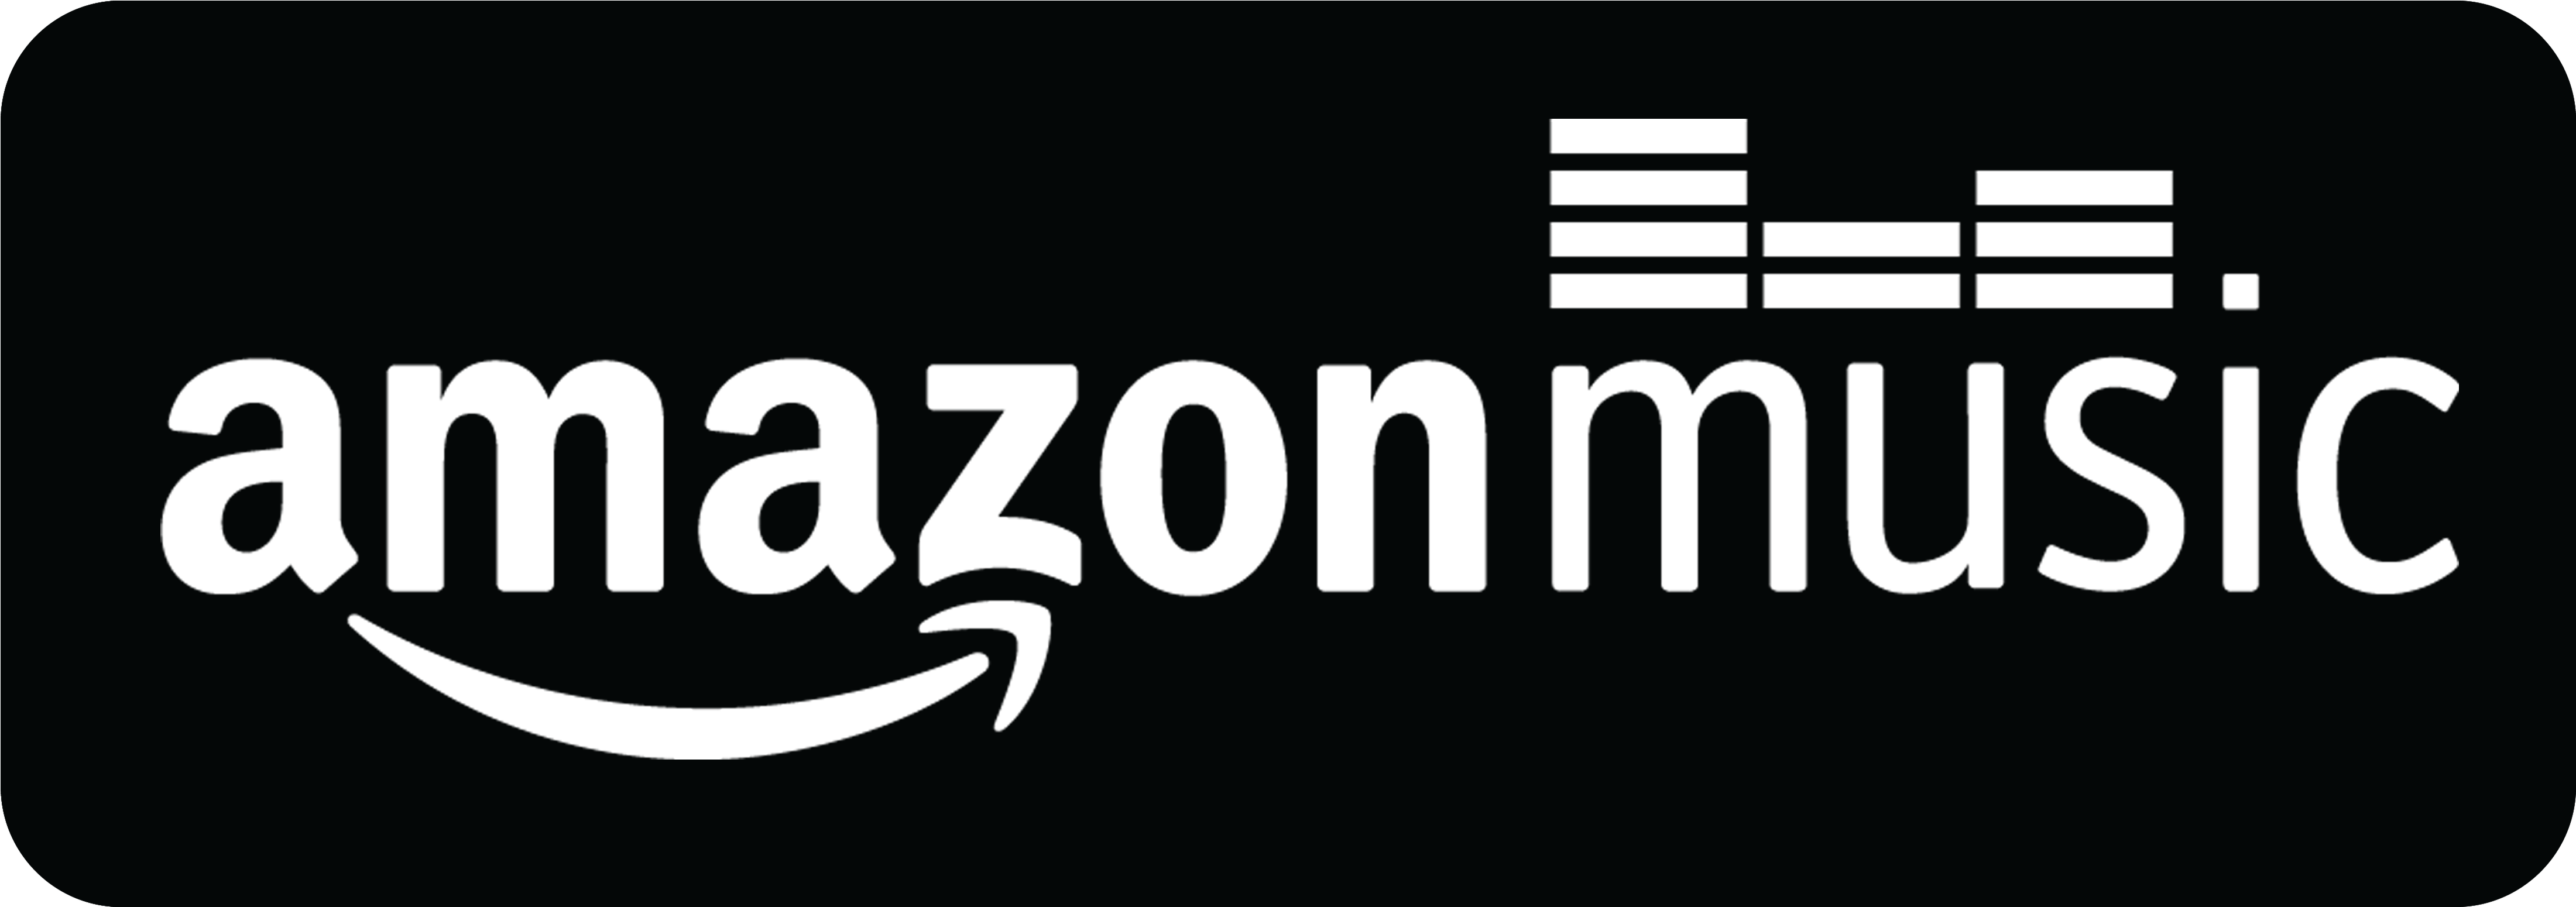 Amazon Music Logo - Download Link Amazon Music Music Logo Png Transparent